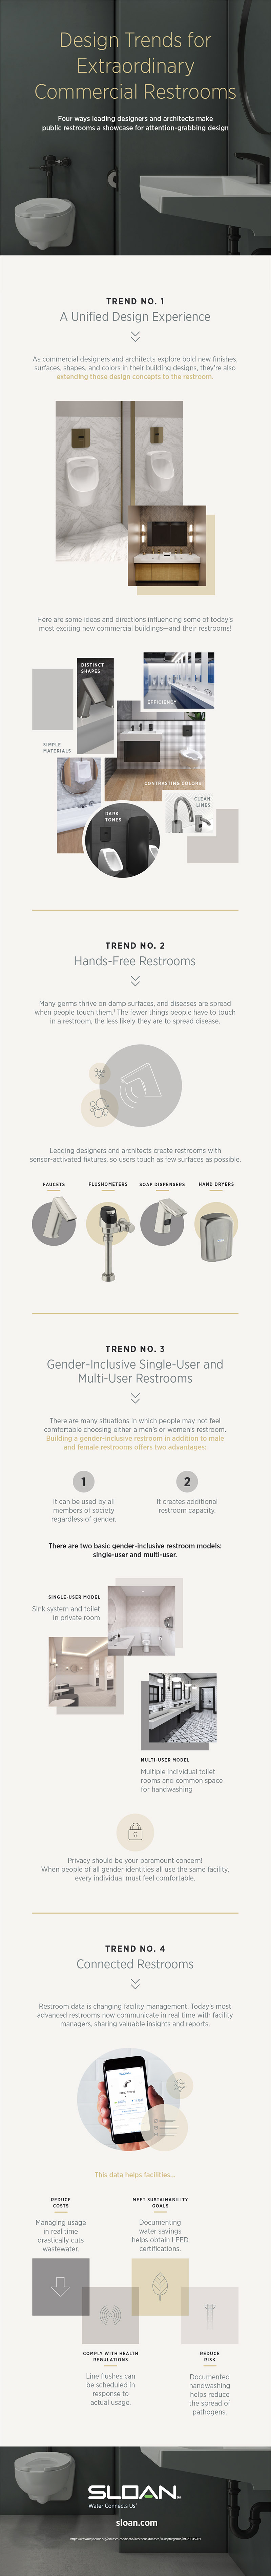 Restroom Design Trends